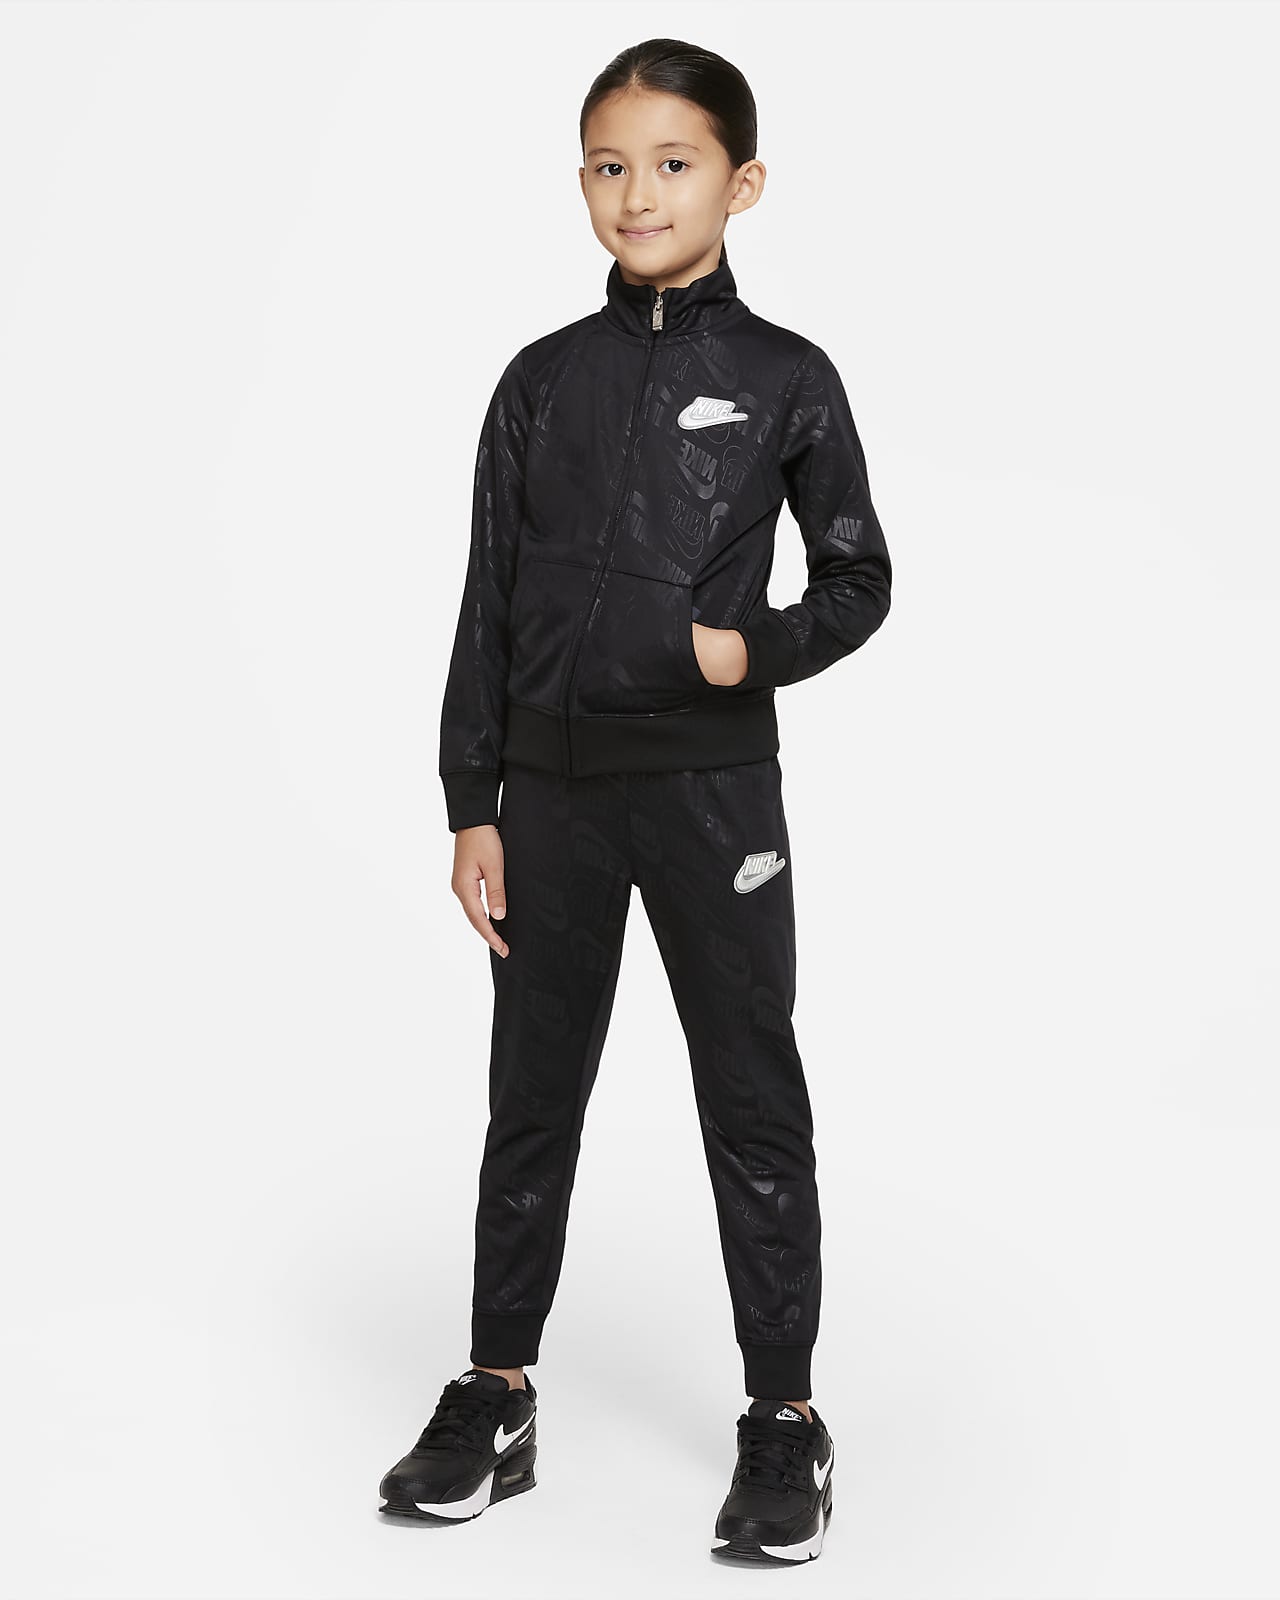 Nike Little Kids' Tracksuit